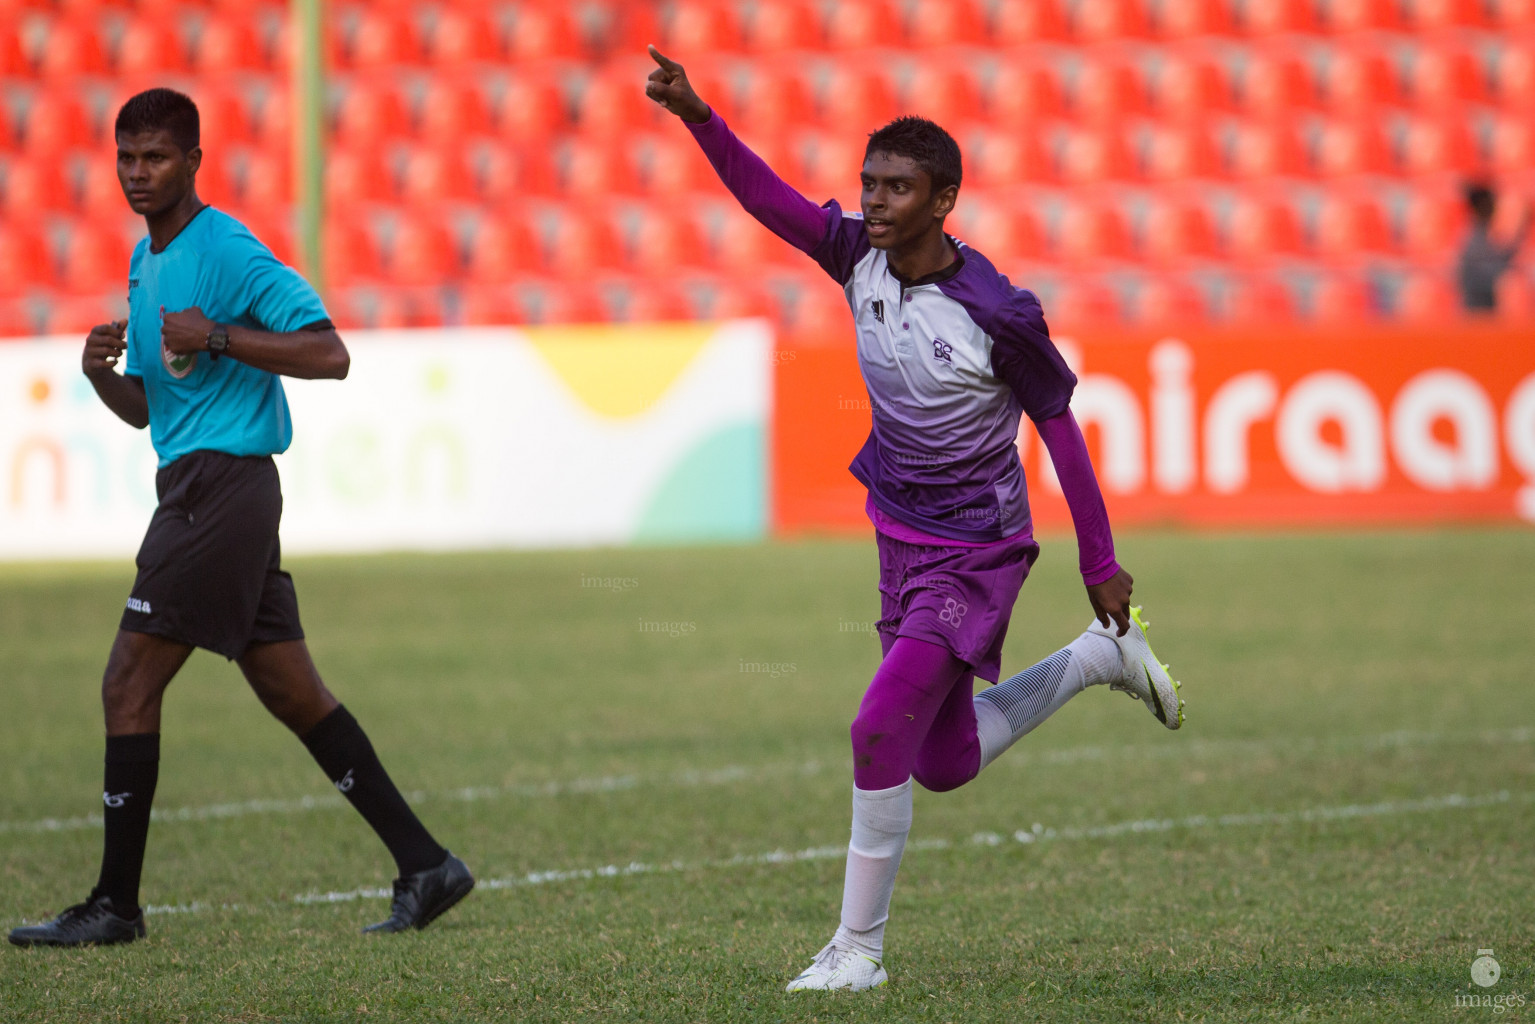 Gulhee School vs Hiriya School in Mamen Inter-School Football Tournament 2019 (U15) on 3rd March 2019, Sunday in Male' Maldives (Images.mv Photo: Suadh Abdul Sattar)